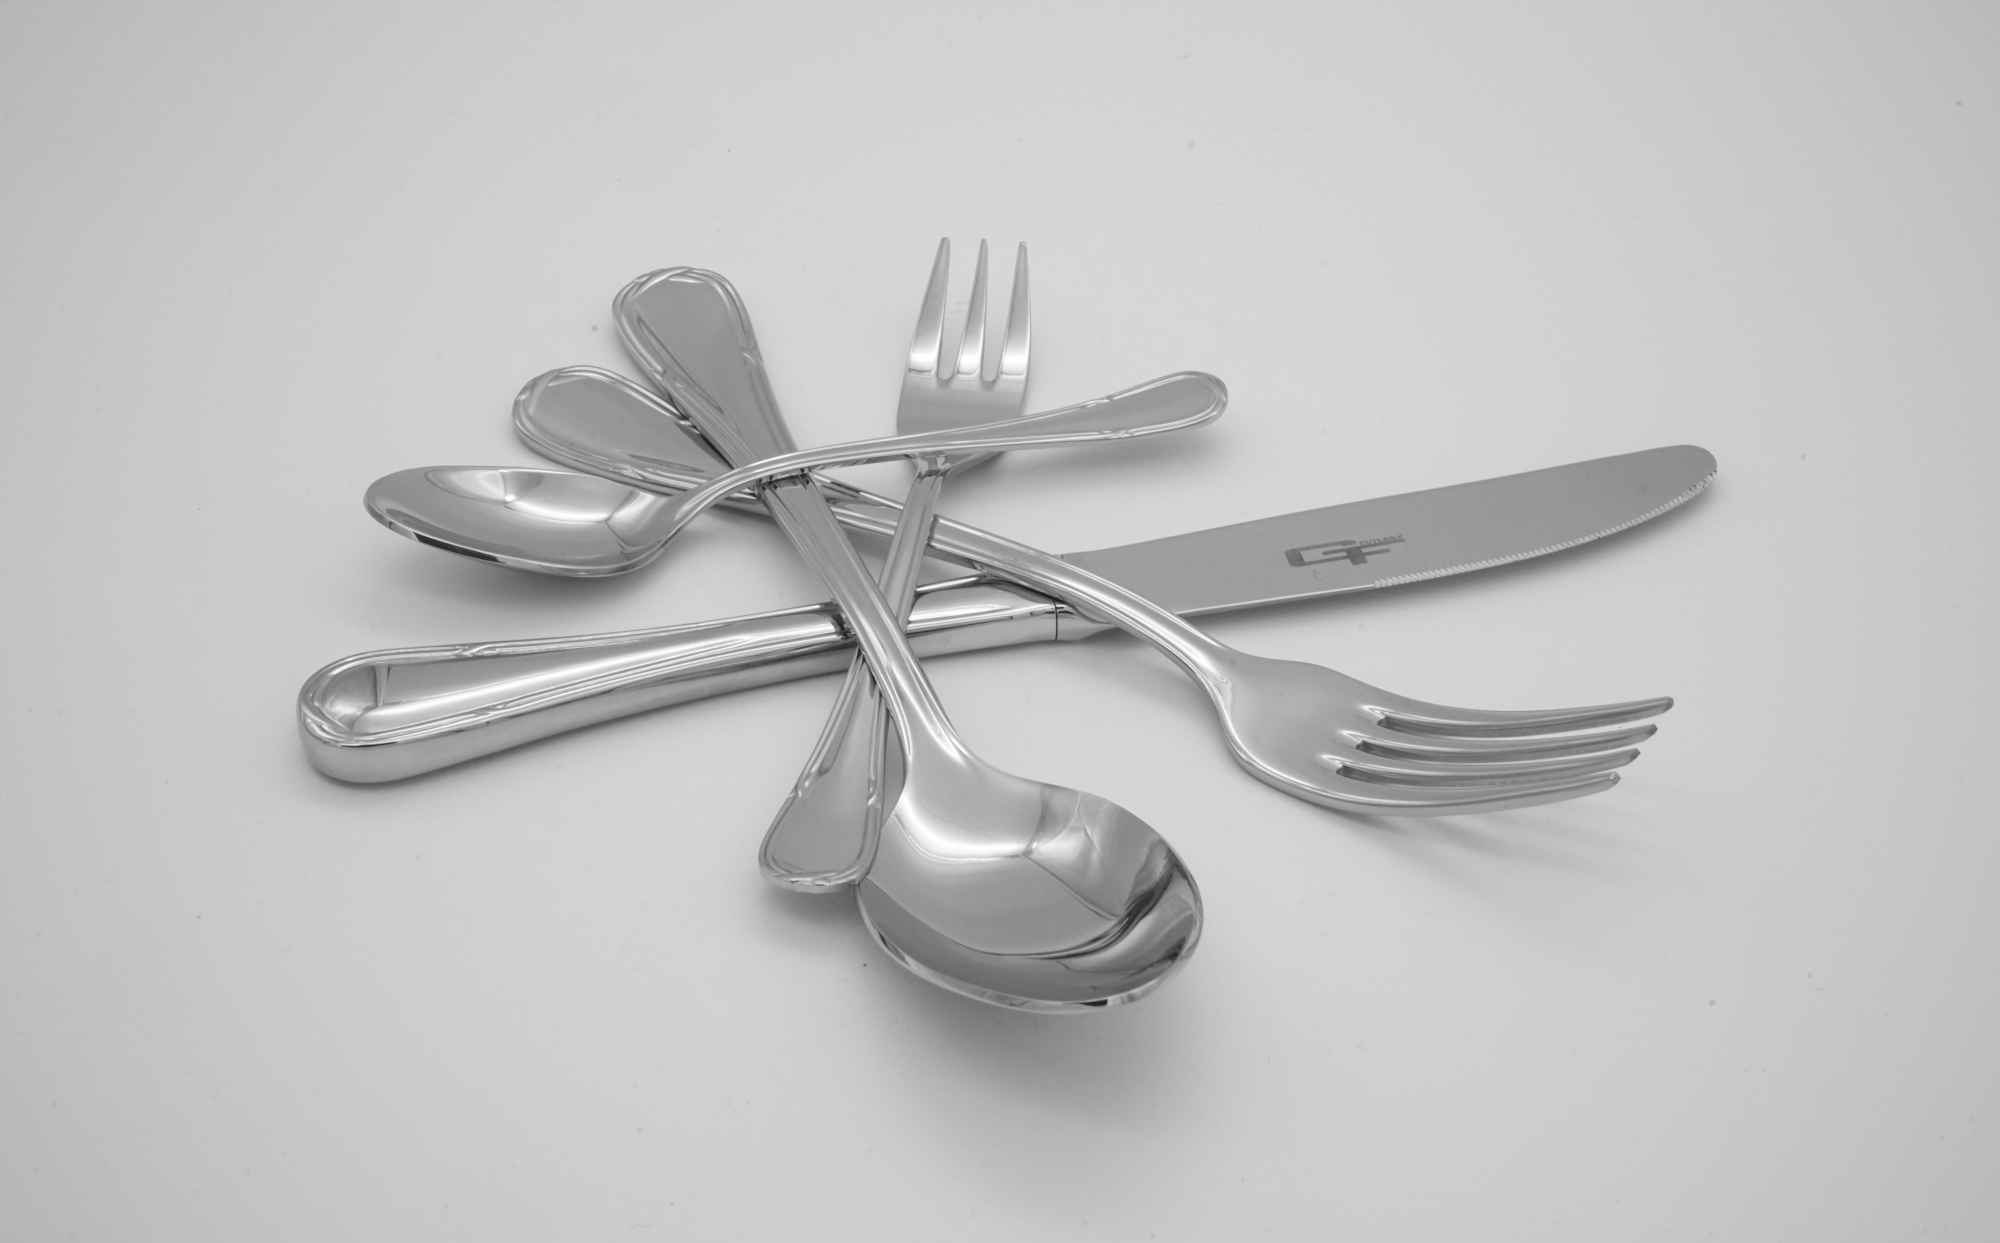 LEGATO_GFC-Giovanni-Filomena-Cutlery-Solingen-MADE-IN-GERMANY-Besteck-Set-Messer-Pfannen-Topf-Toepfe-dishes-tableware-knives-knife-Tafelware-rostfrei-Edelstahl-stainless-steel-DSC01108-2